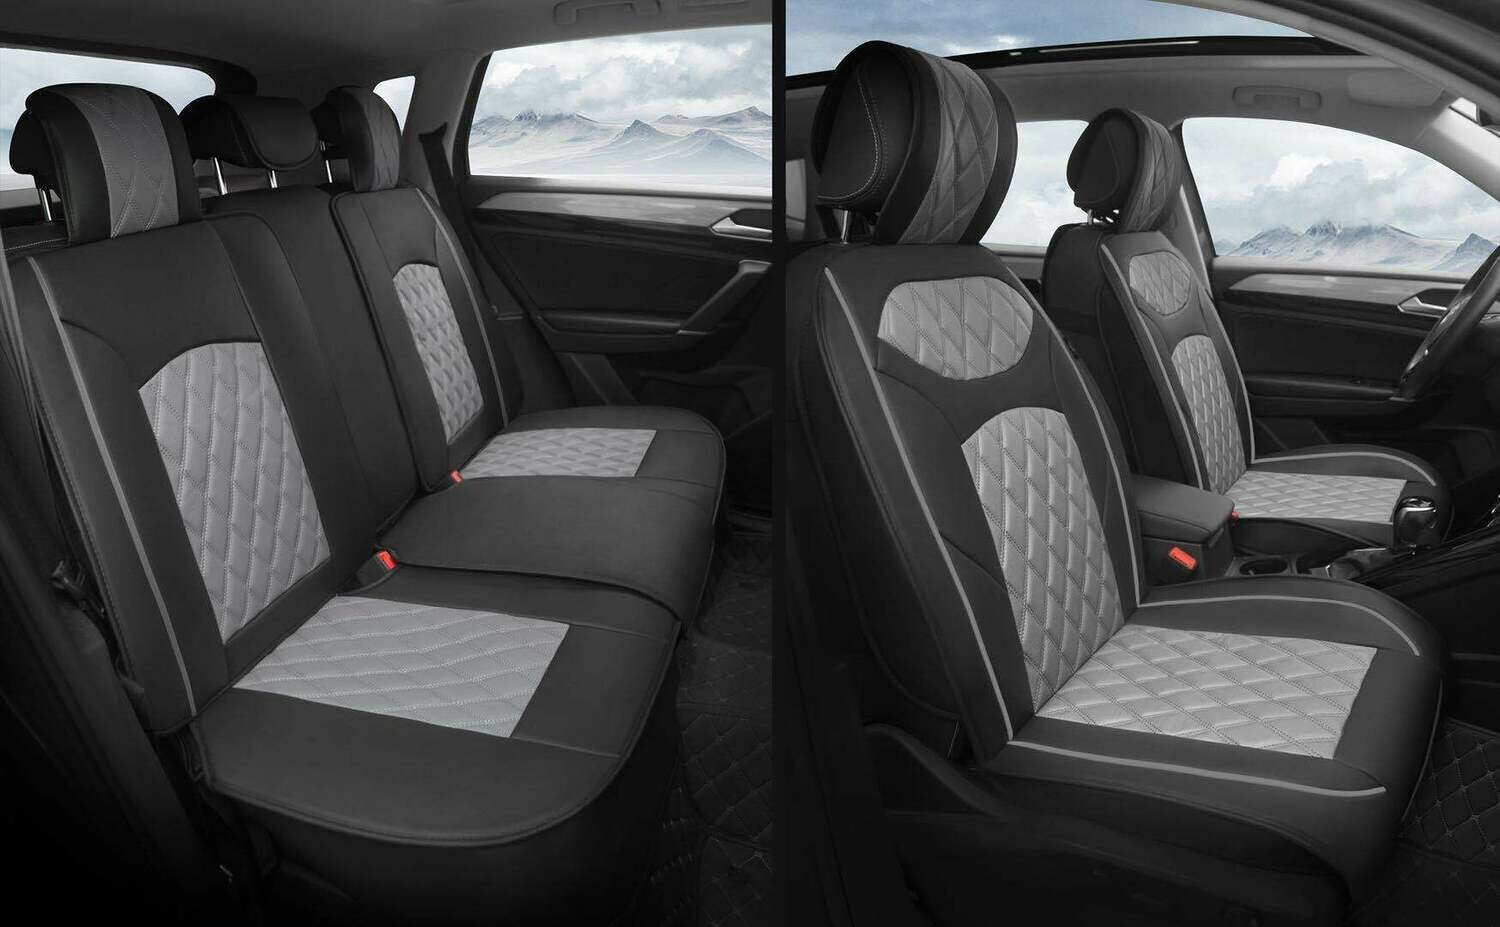 Universal PU Leather Car Seat Cover Cushion 5 Seat -Full Set - Black/Grey